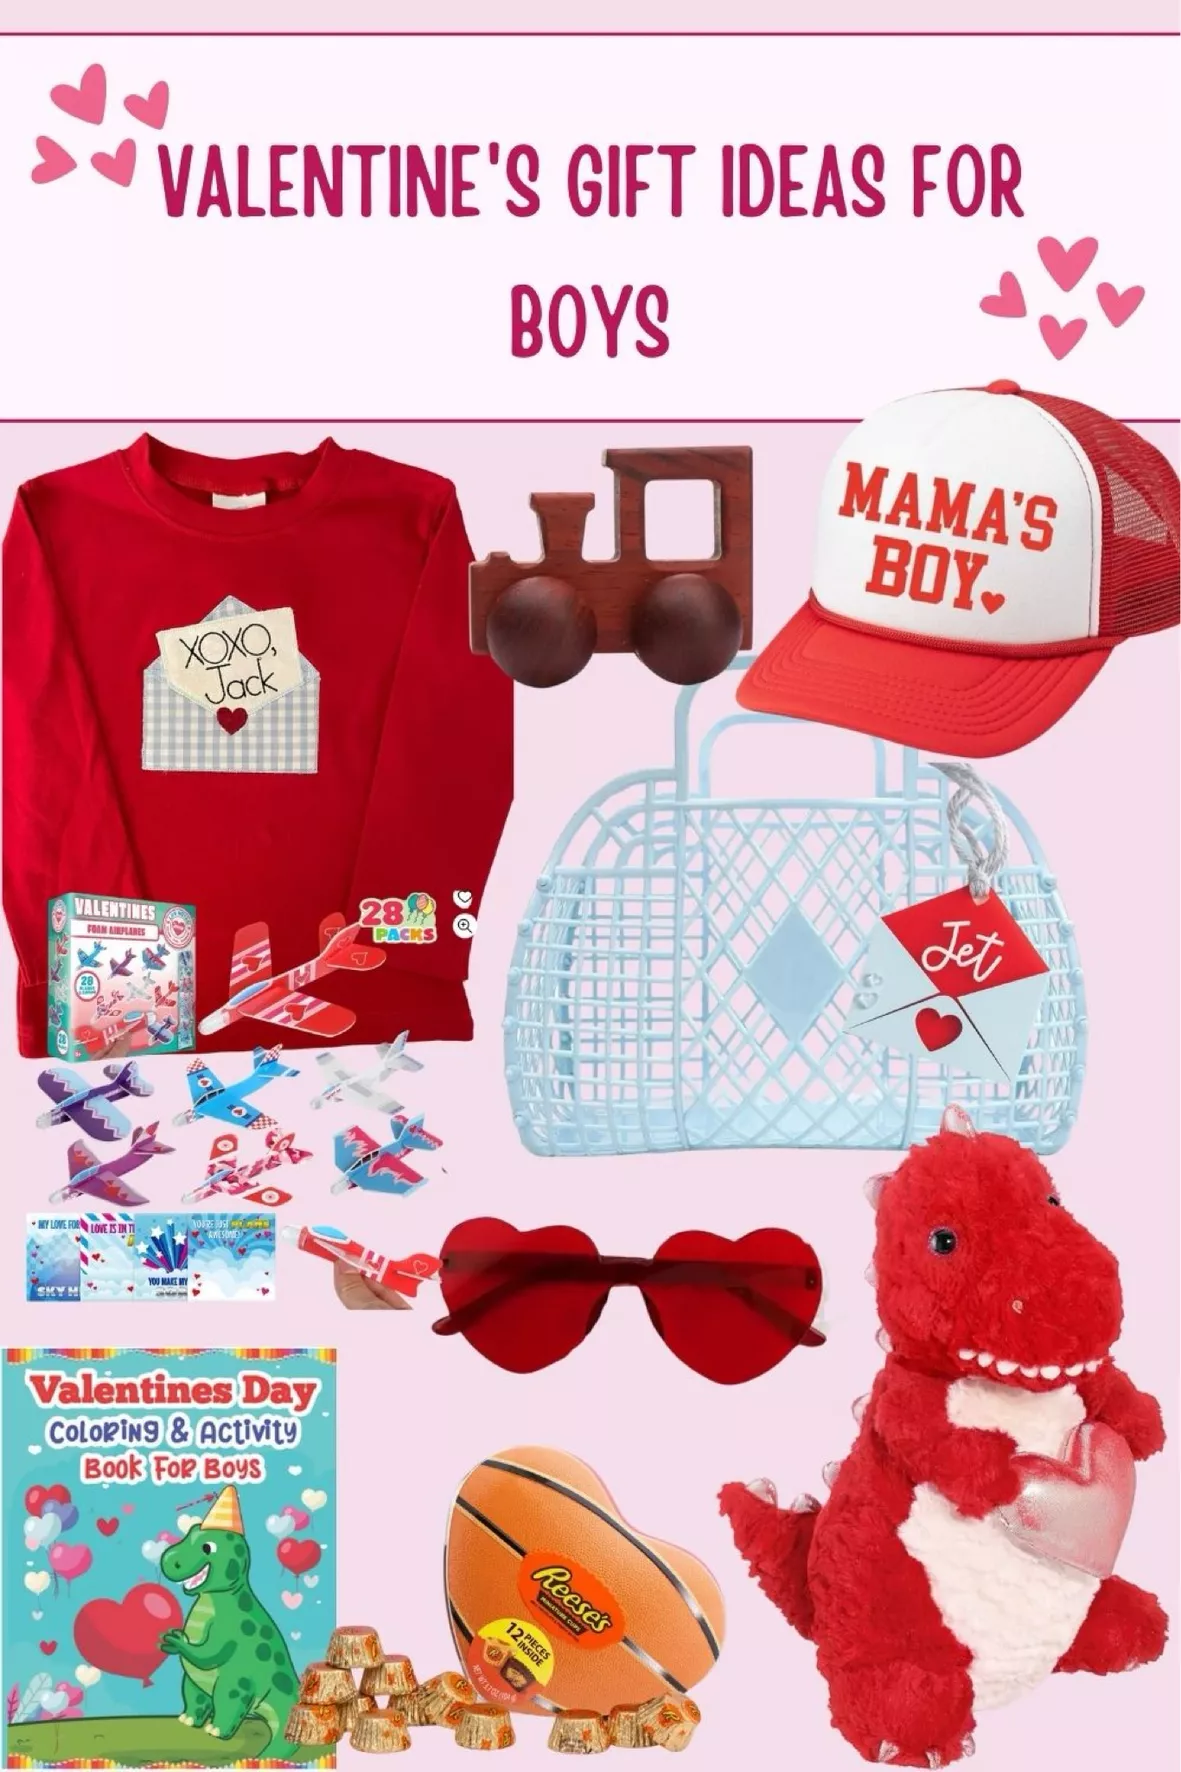 Custom Valentine Gift Box, Personalized Valentine Gifts